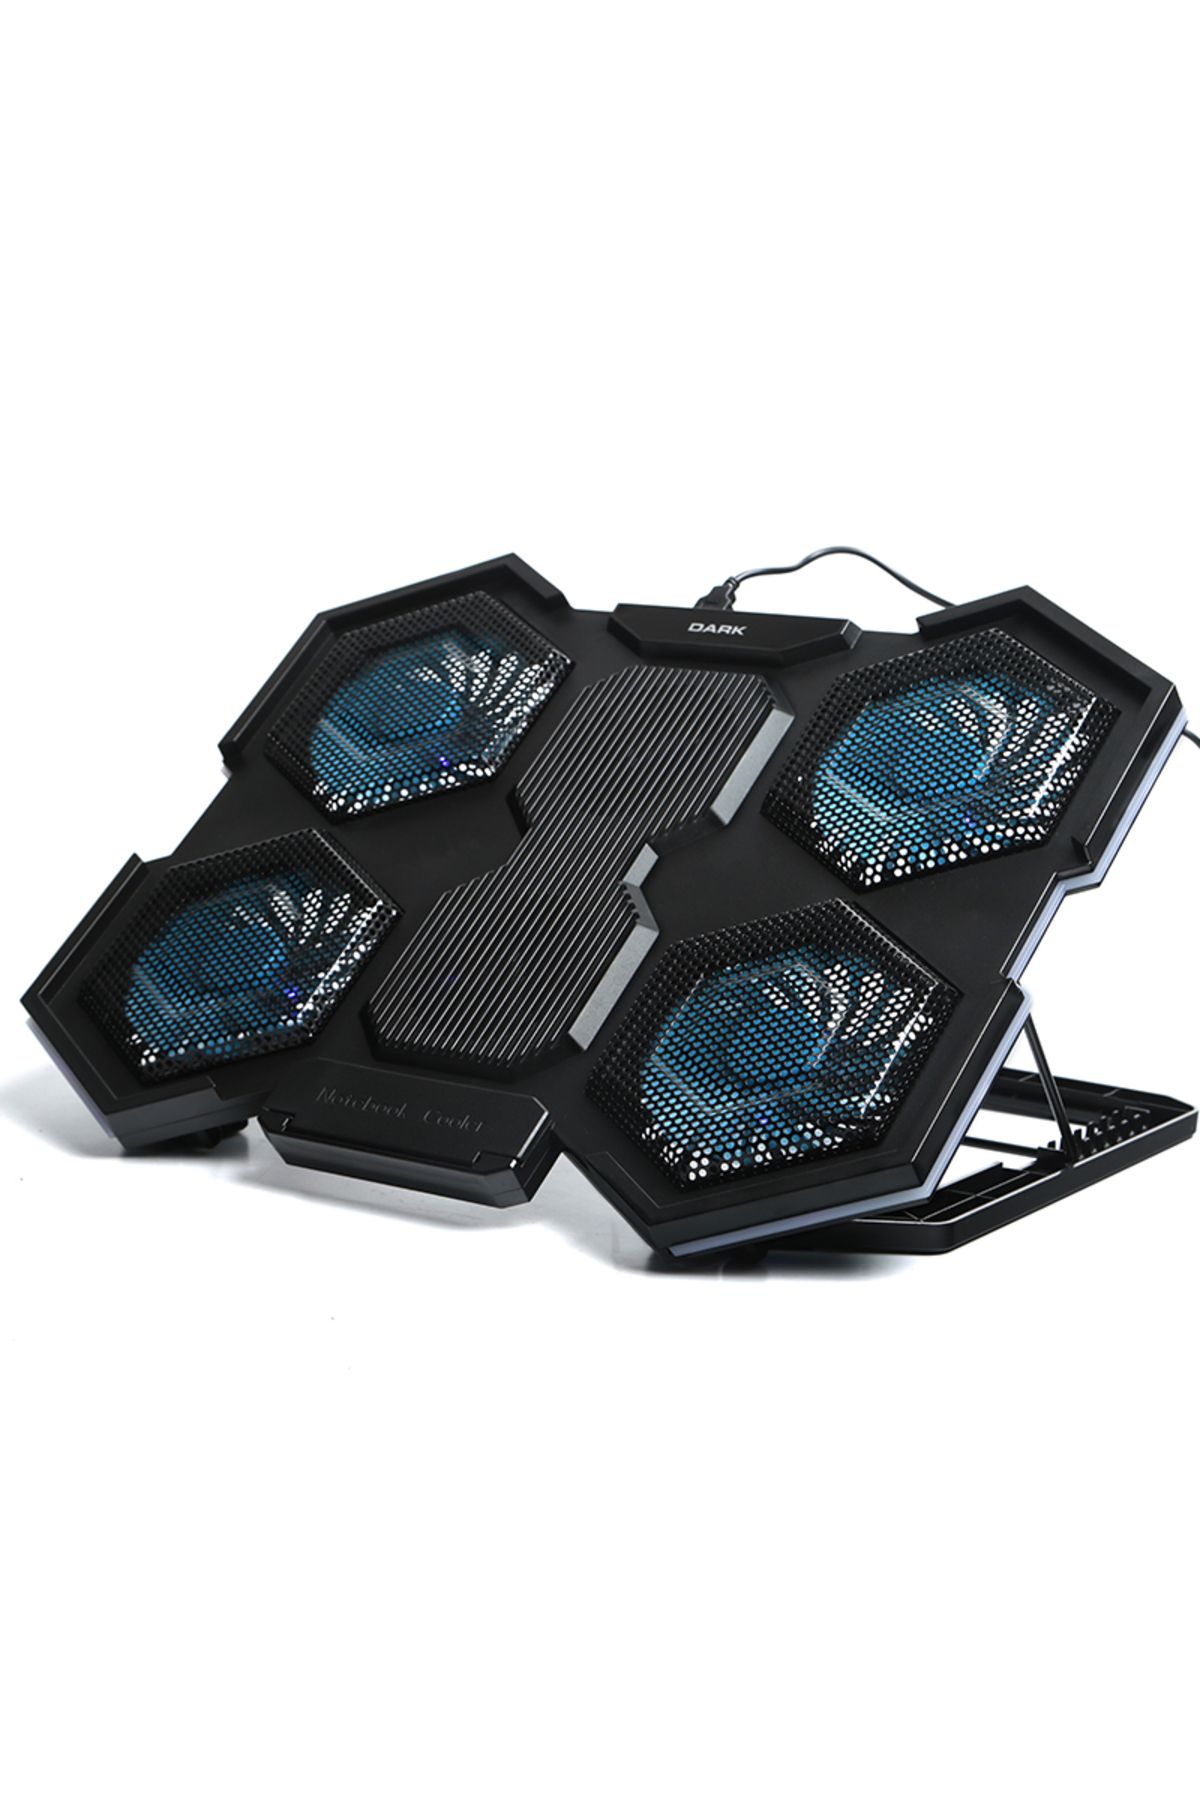 Dark Aeromax 6x LED FAN'lı, 7x Yükseklik Ayarlı, 2x USB 11"-17" Gaming Notebook Soğutucu ve Stand